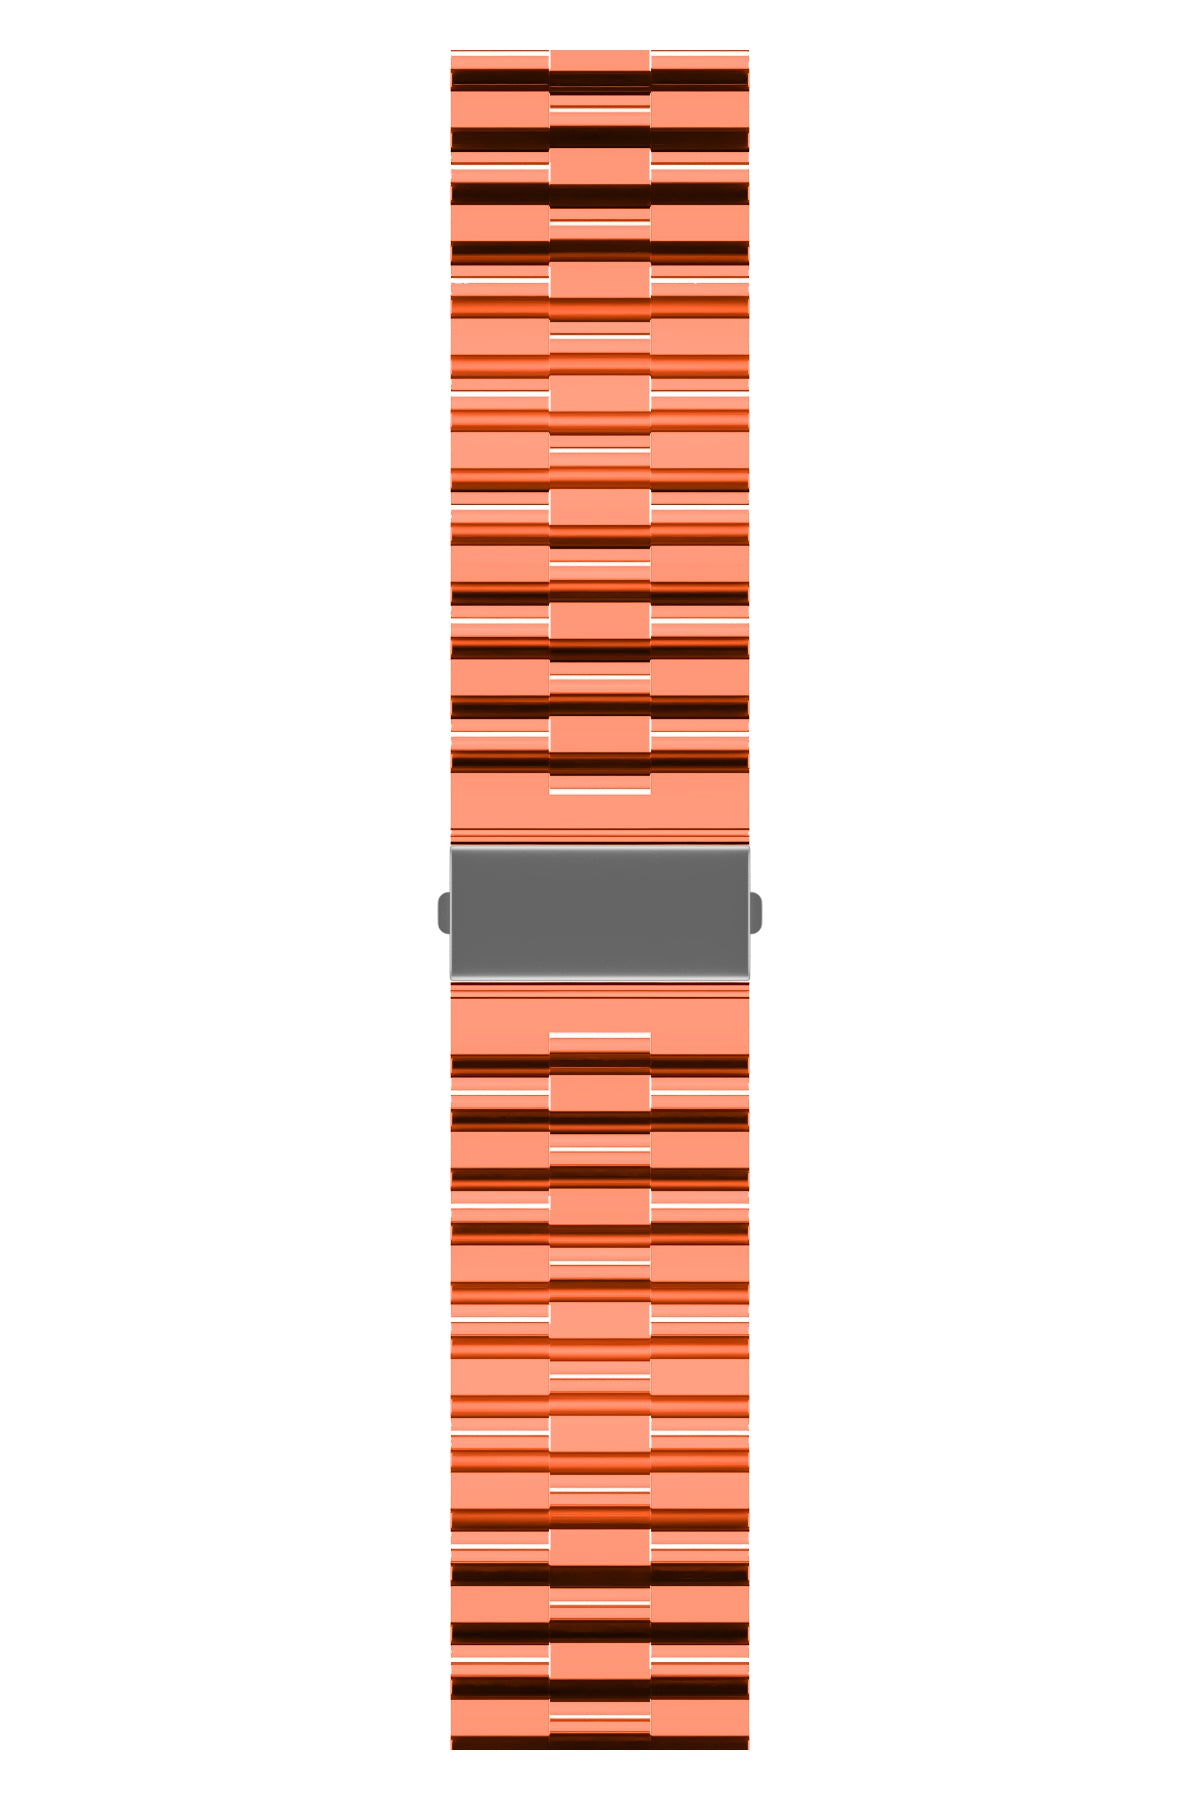 Apple Watch Compatible Funny Loop Band Orange 